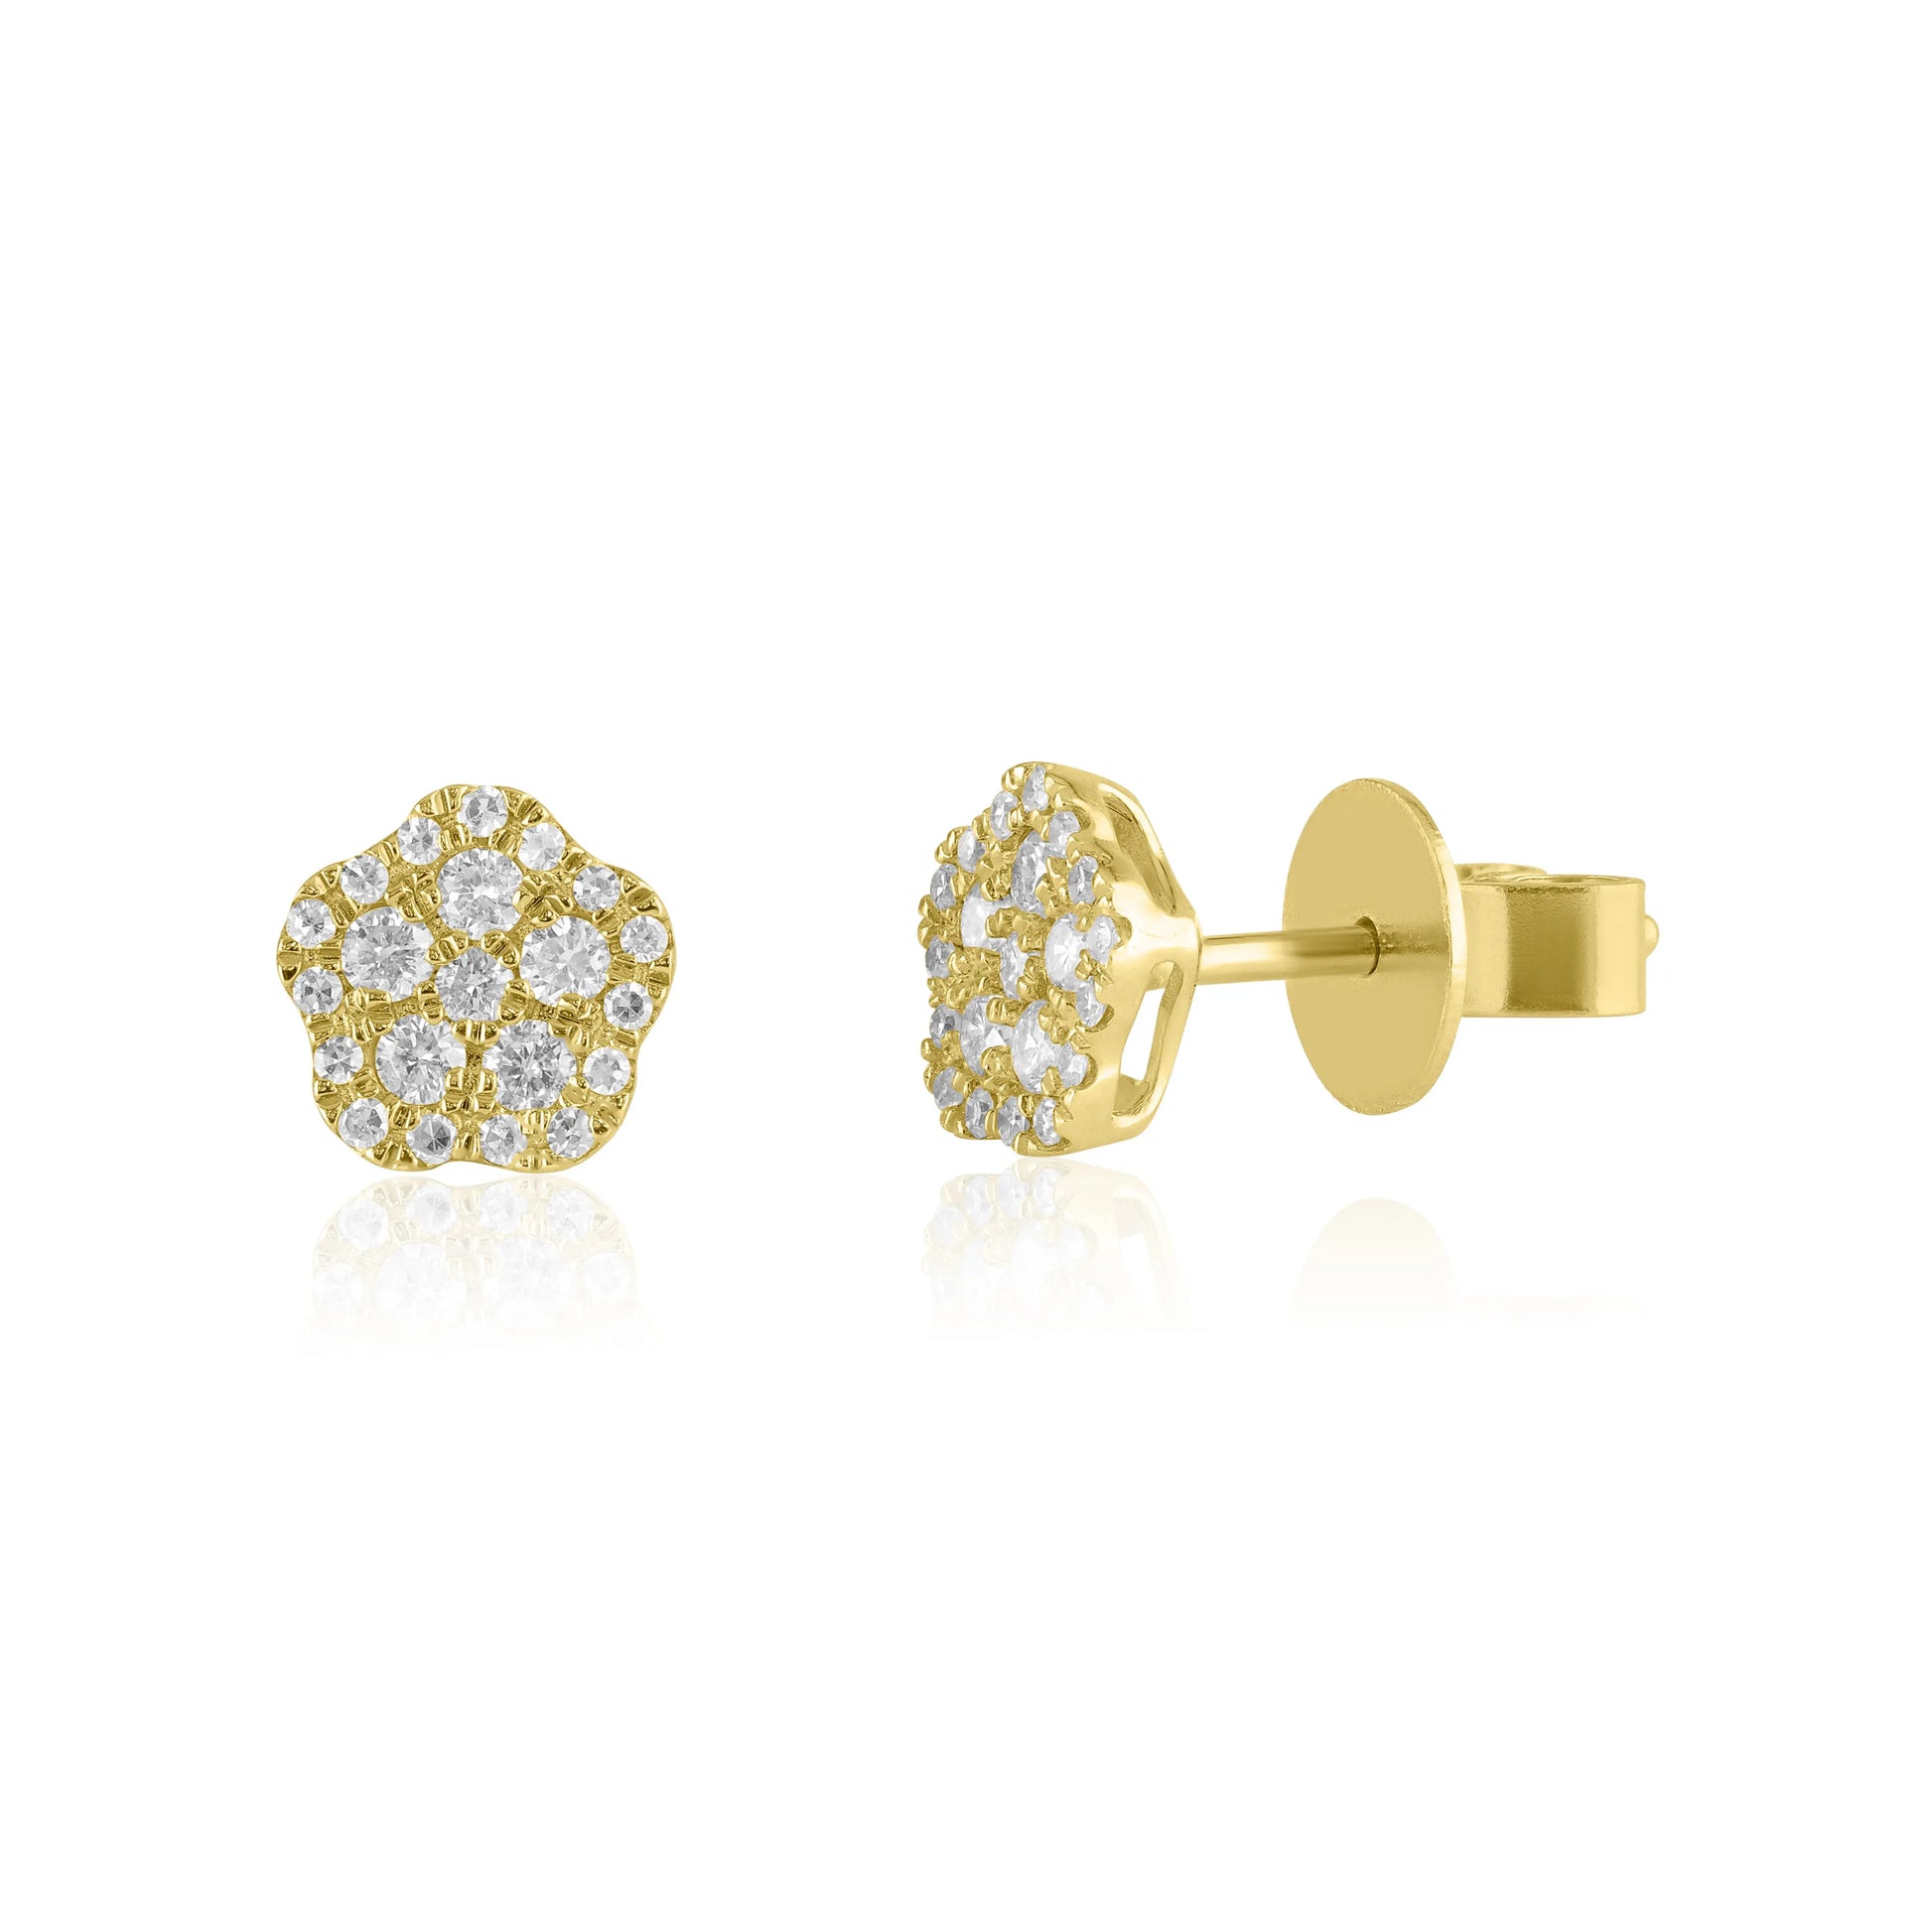 White Gold Earrings Floral Diamond Cluster Stud Earrings dansonjewelers Danson Jewelers 